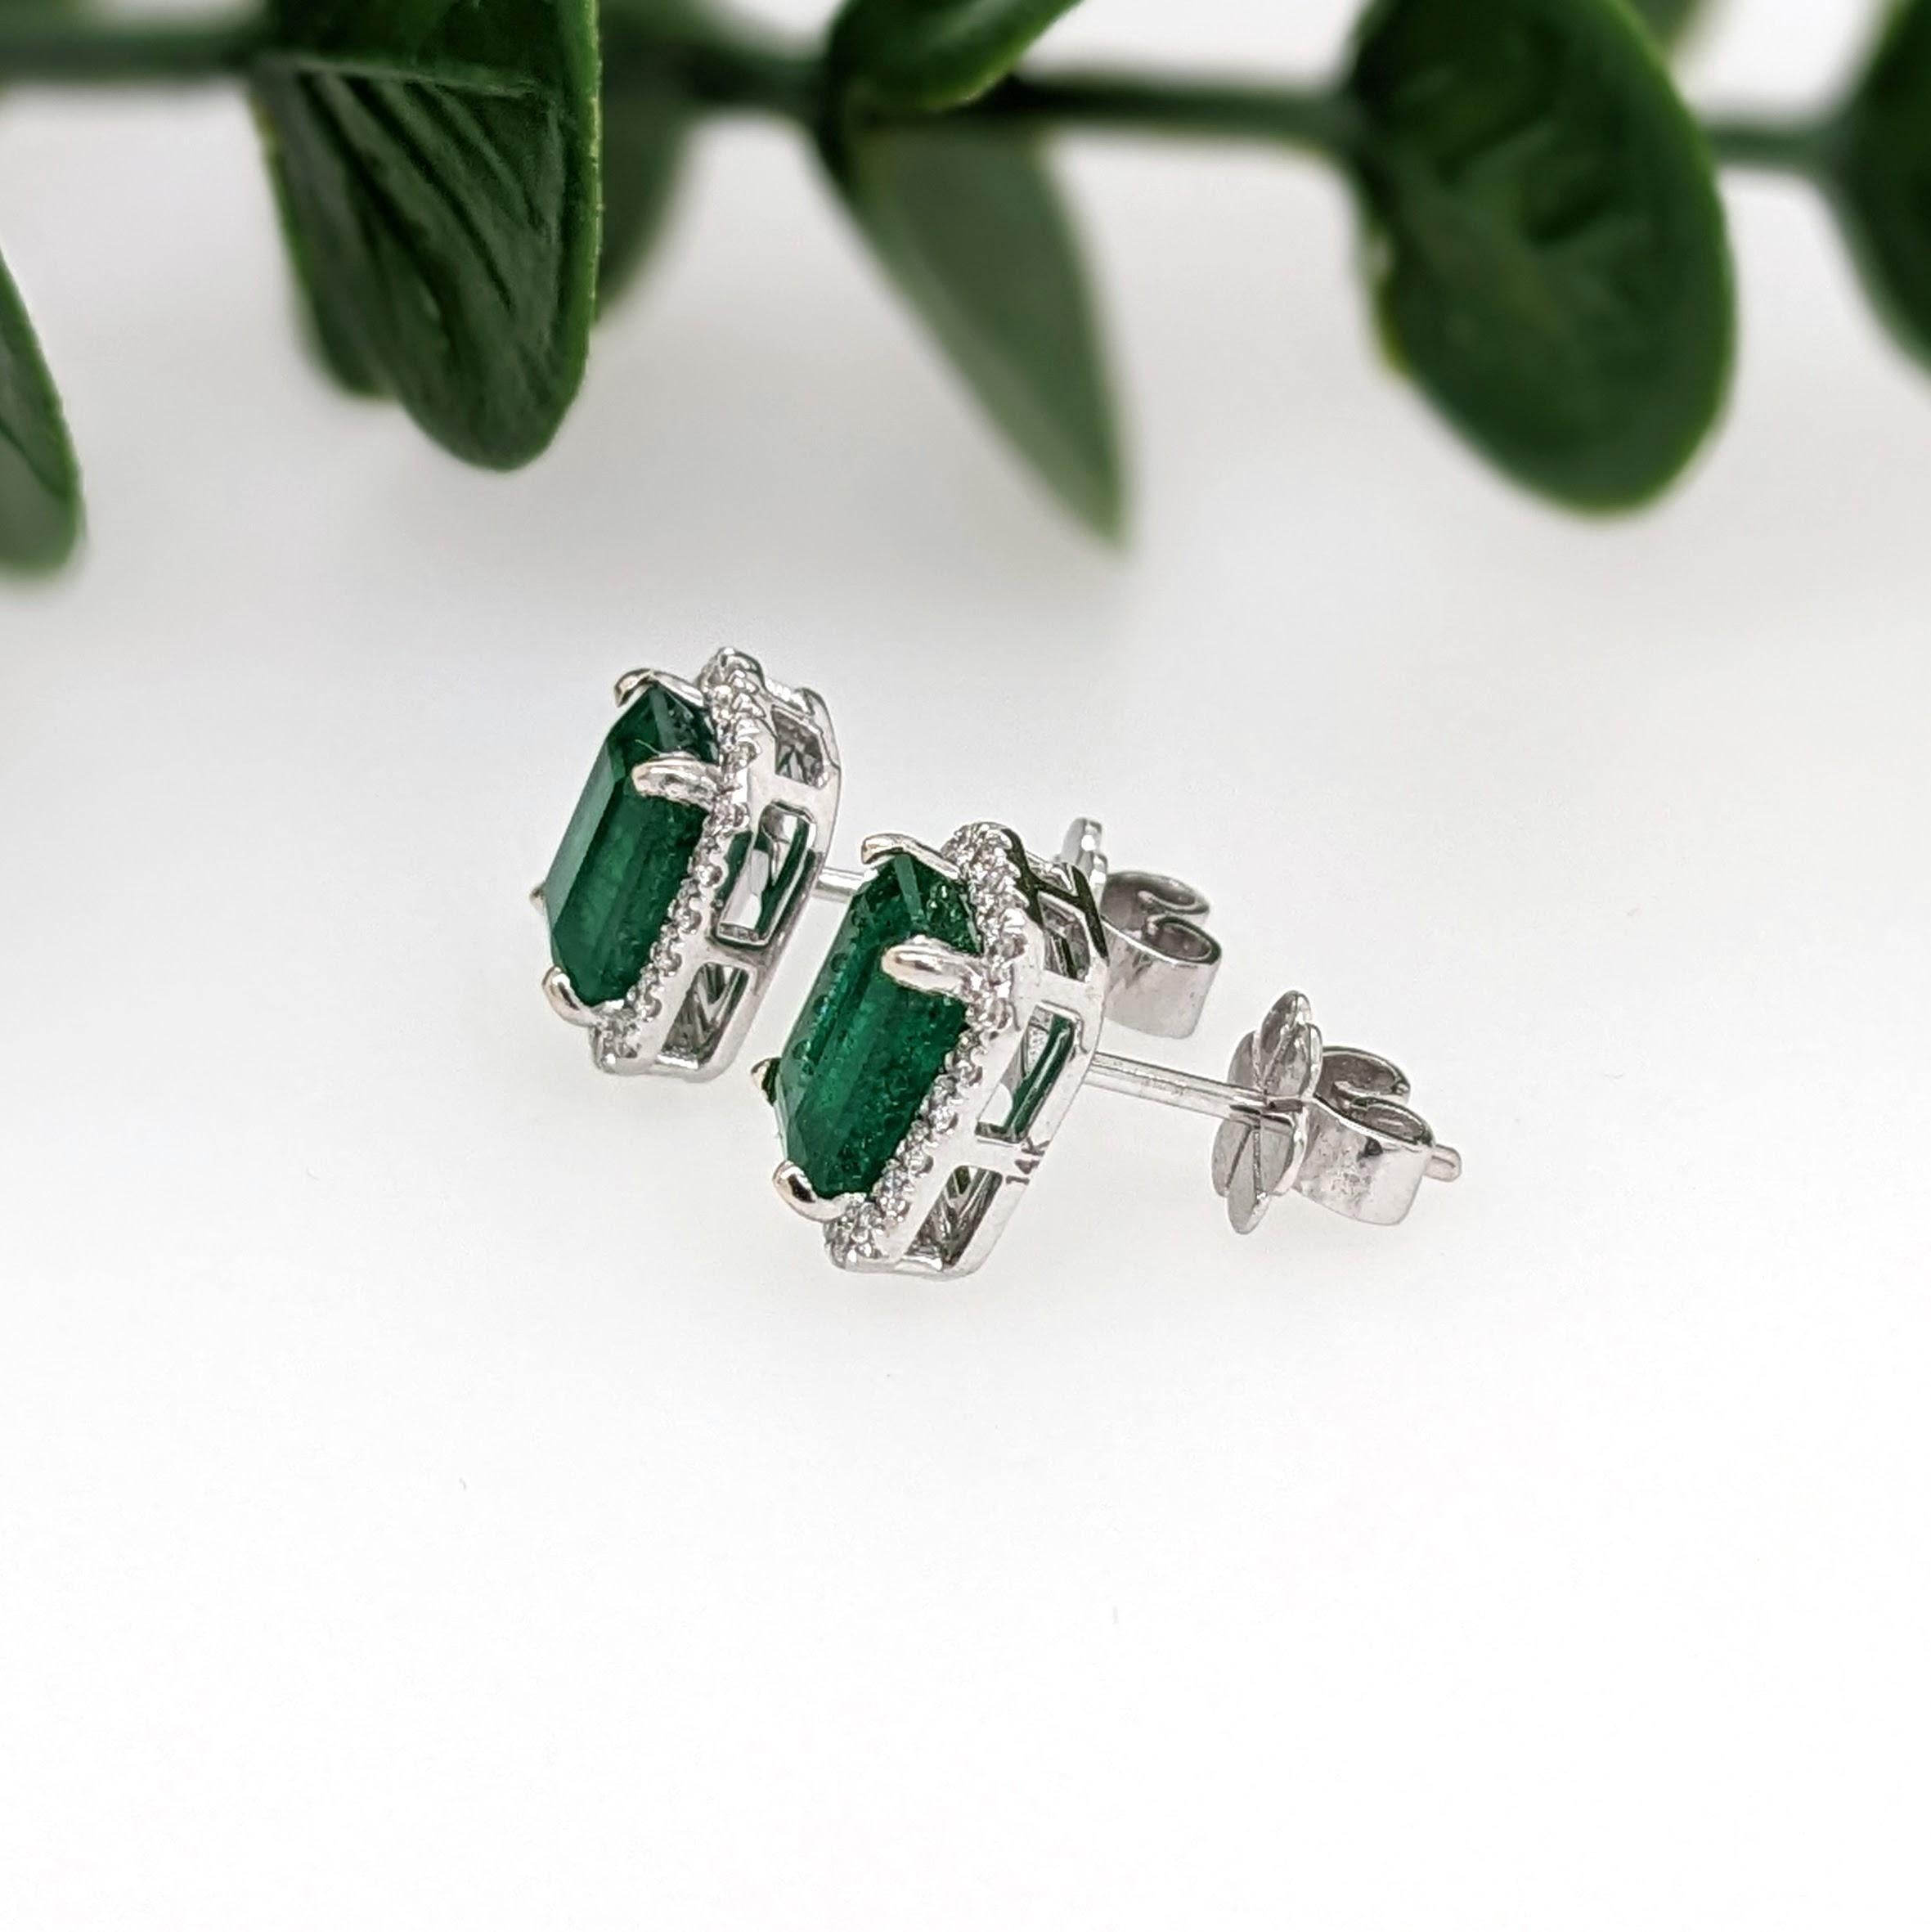 Modern 2.3ct Zambian Emerald Stud Earrings w Natural Diamond Halo in Solid 14K Gold 7x5